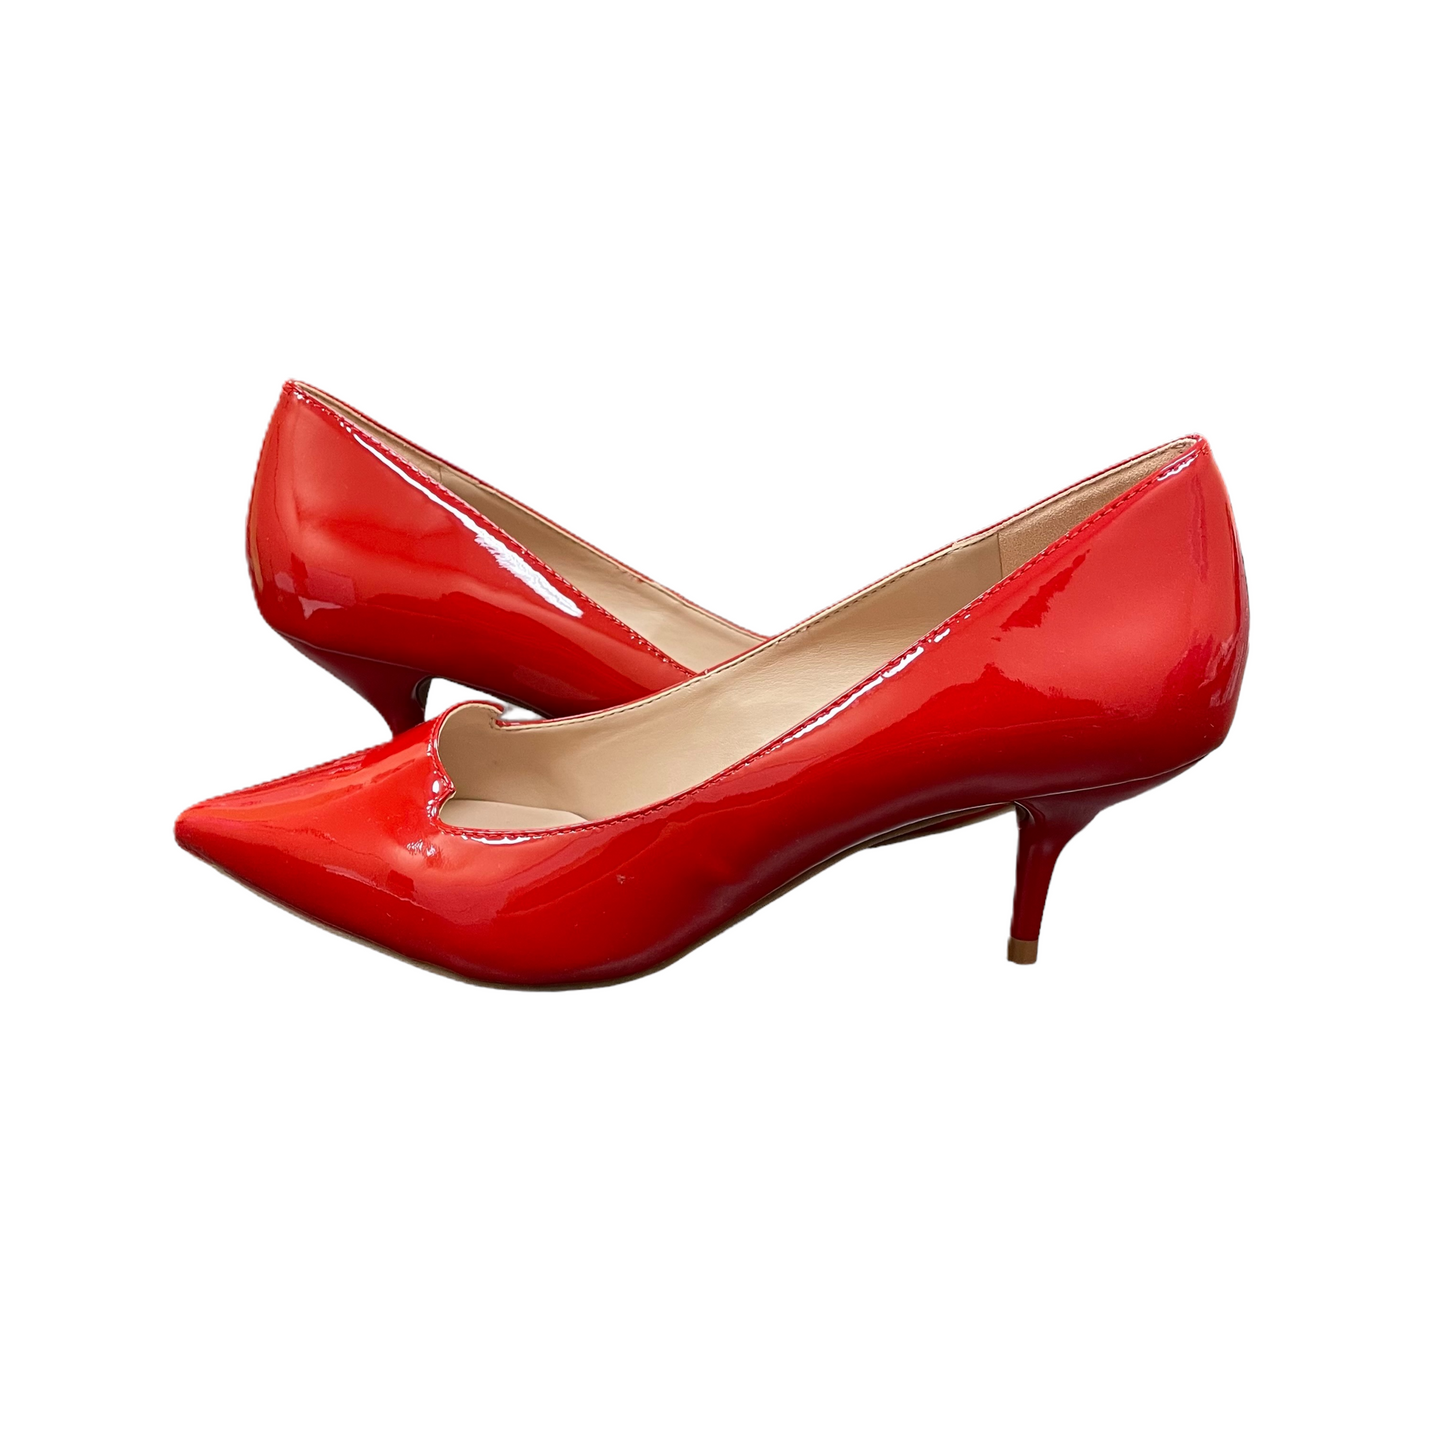 Red Shoes Heels Kitten By Kurt Geiger, Size: 7.5